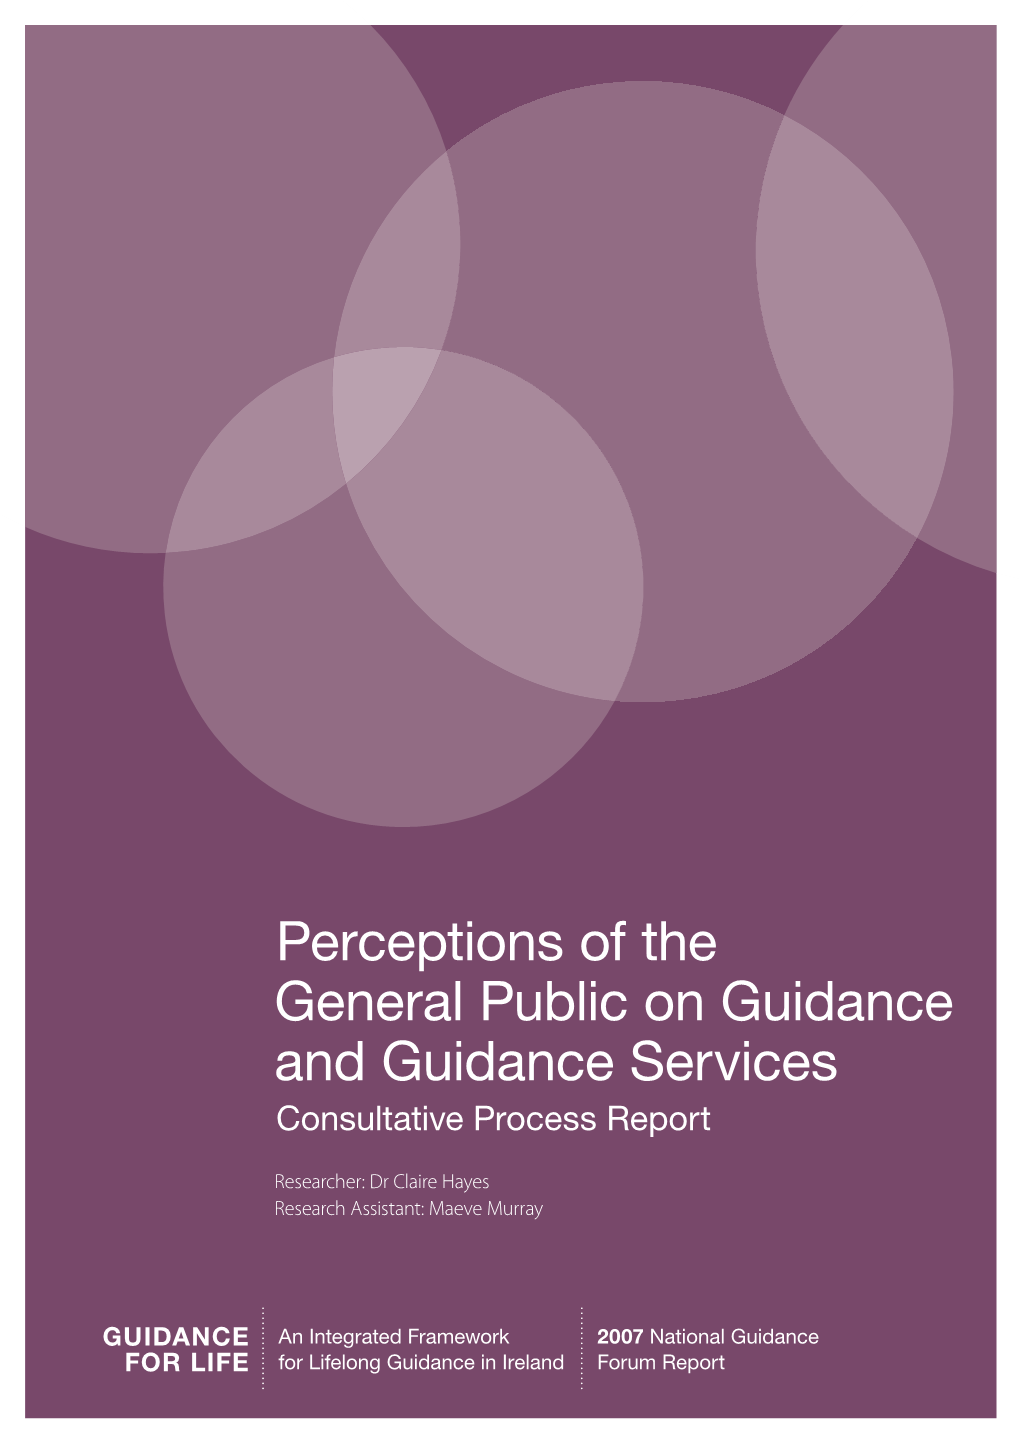 Consultative Process Report